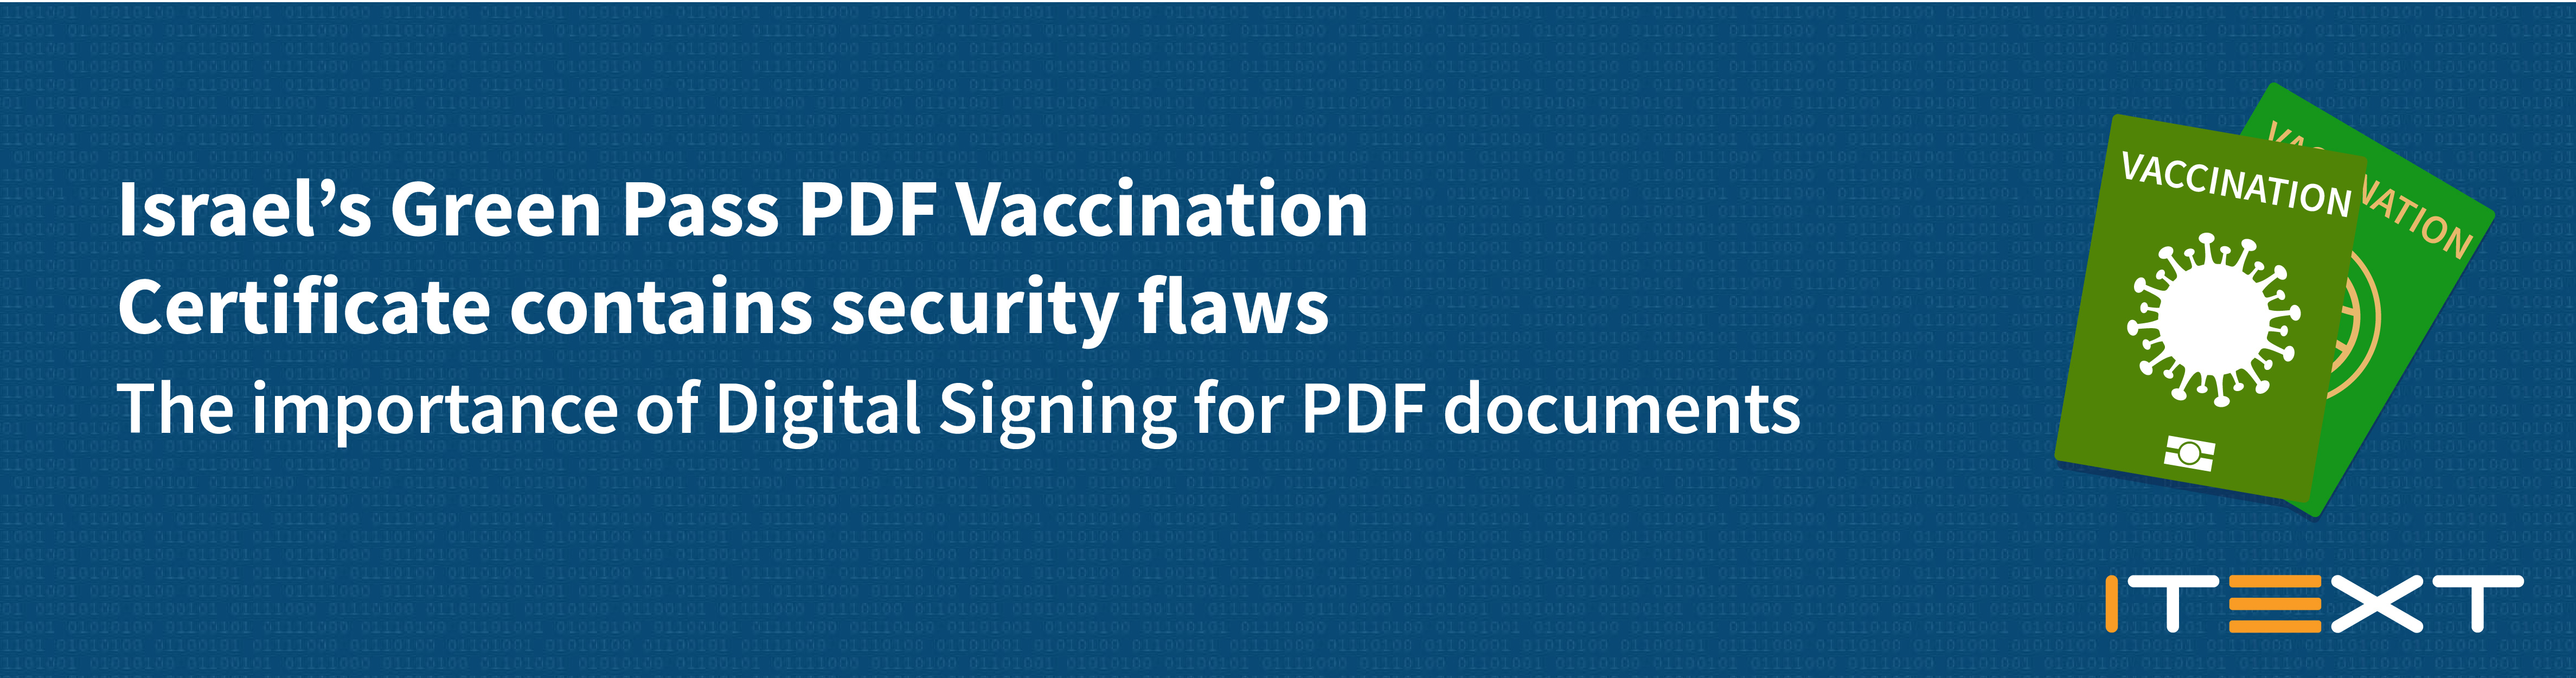 green pass pdf vaccination certificate